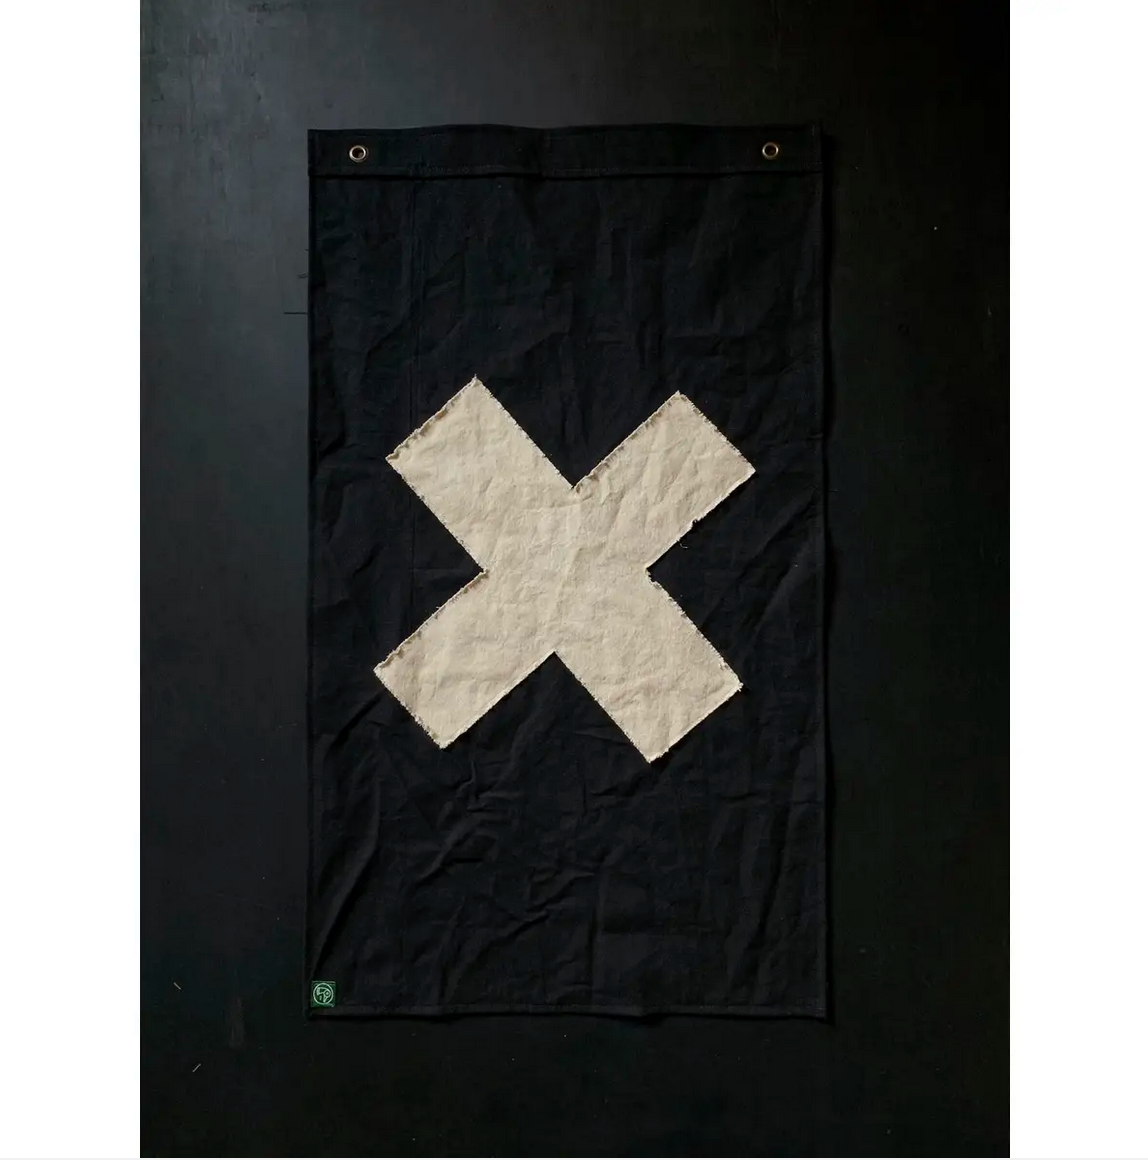 Black X Flag